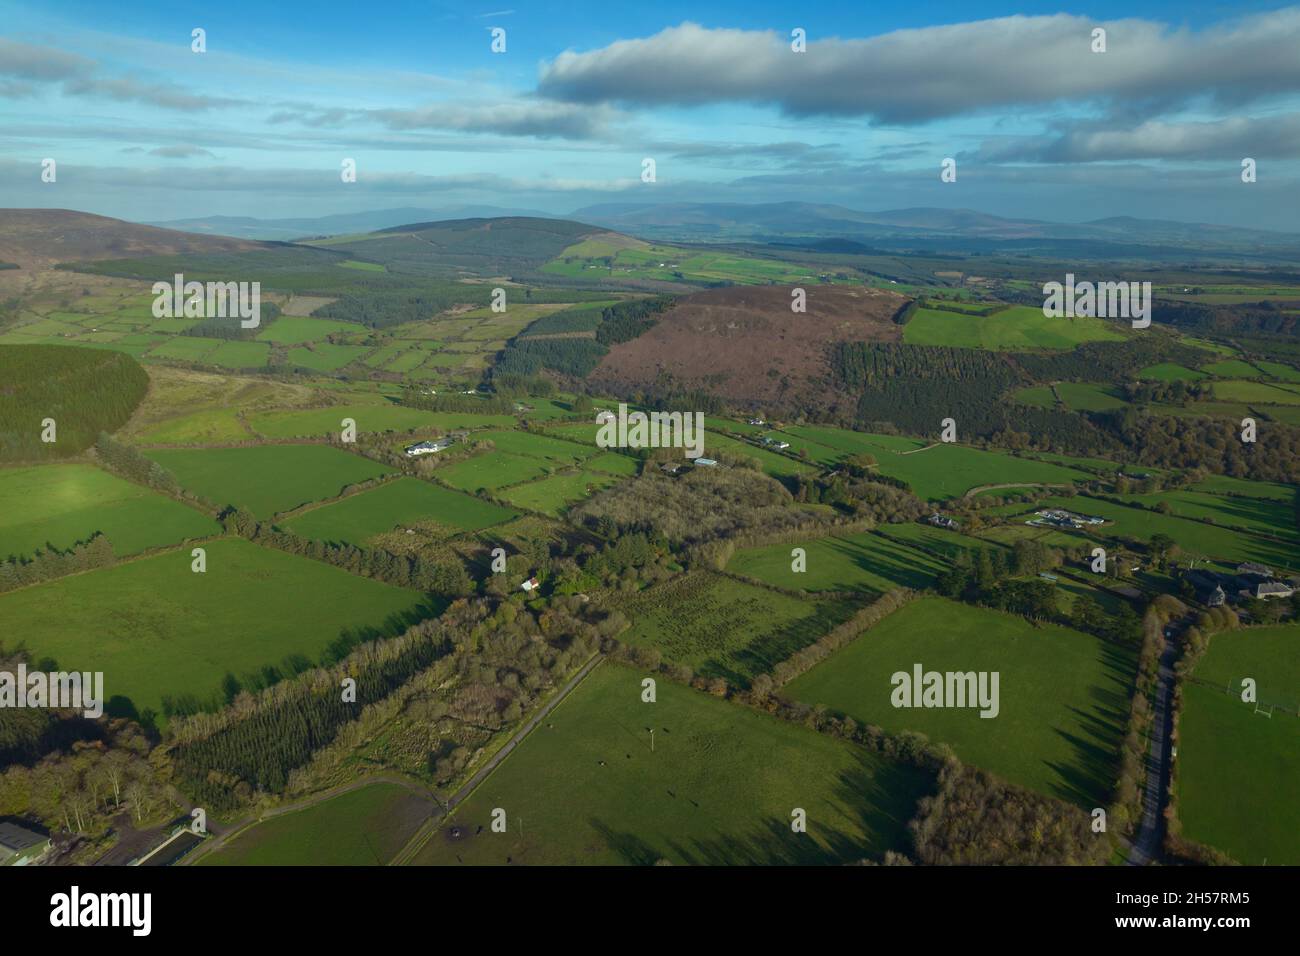 Drone image of the fertile farmland surrounding Mount Melleray Stock Photo